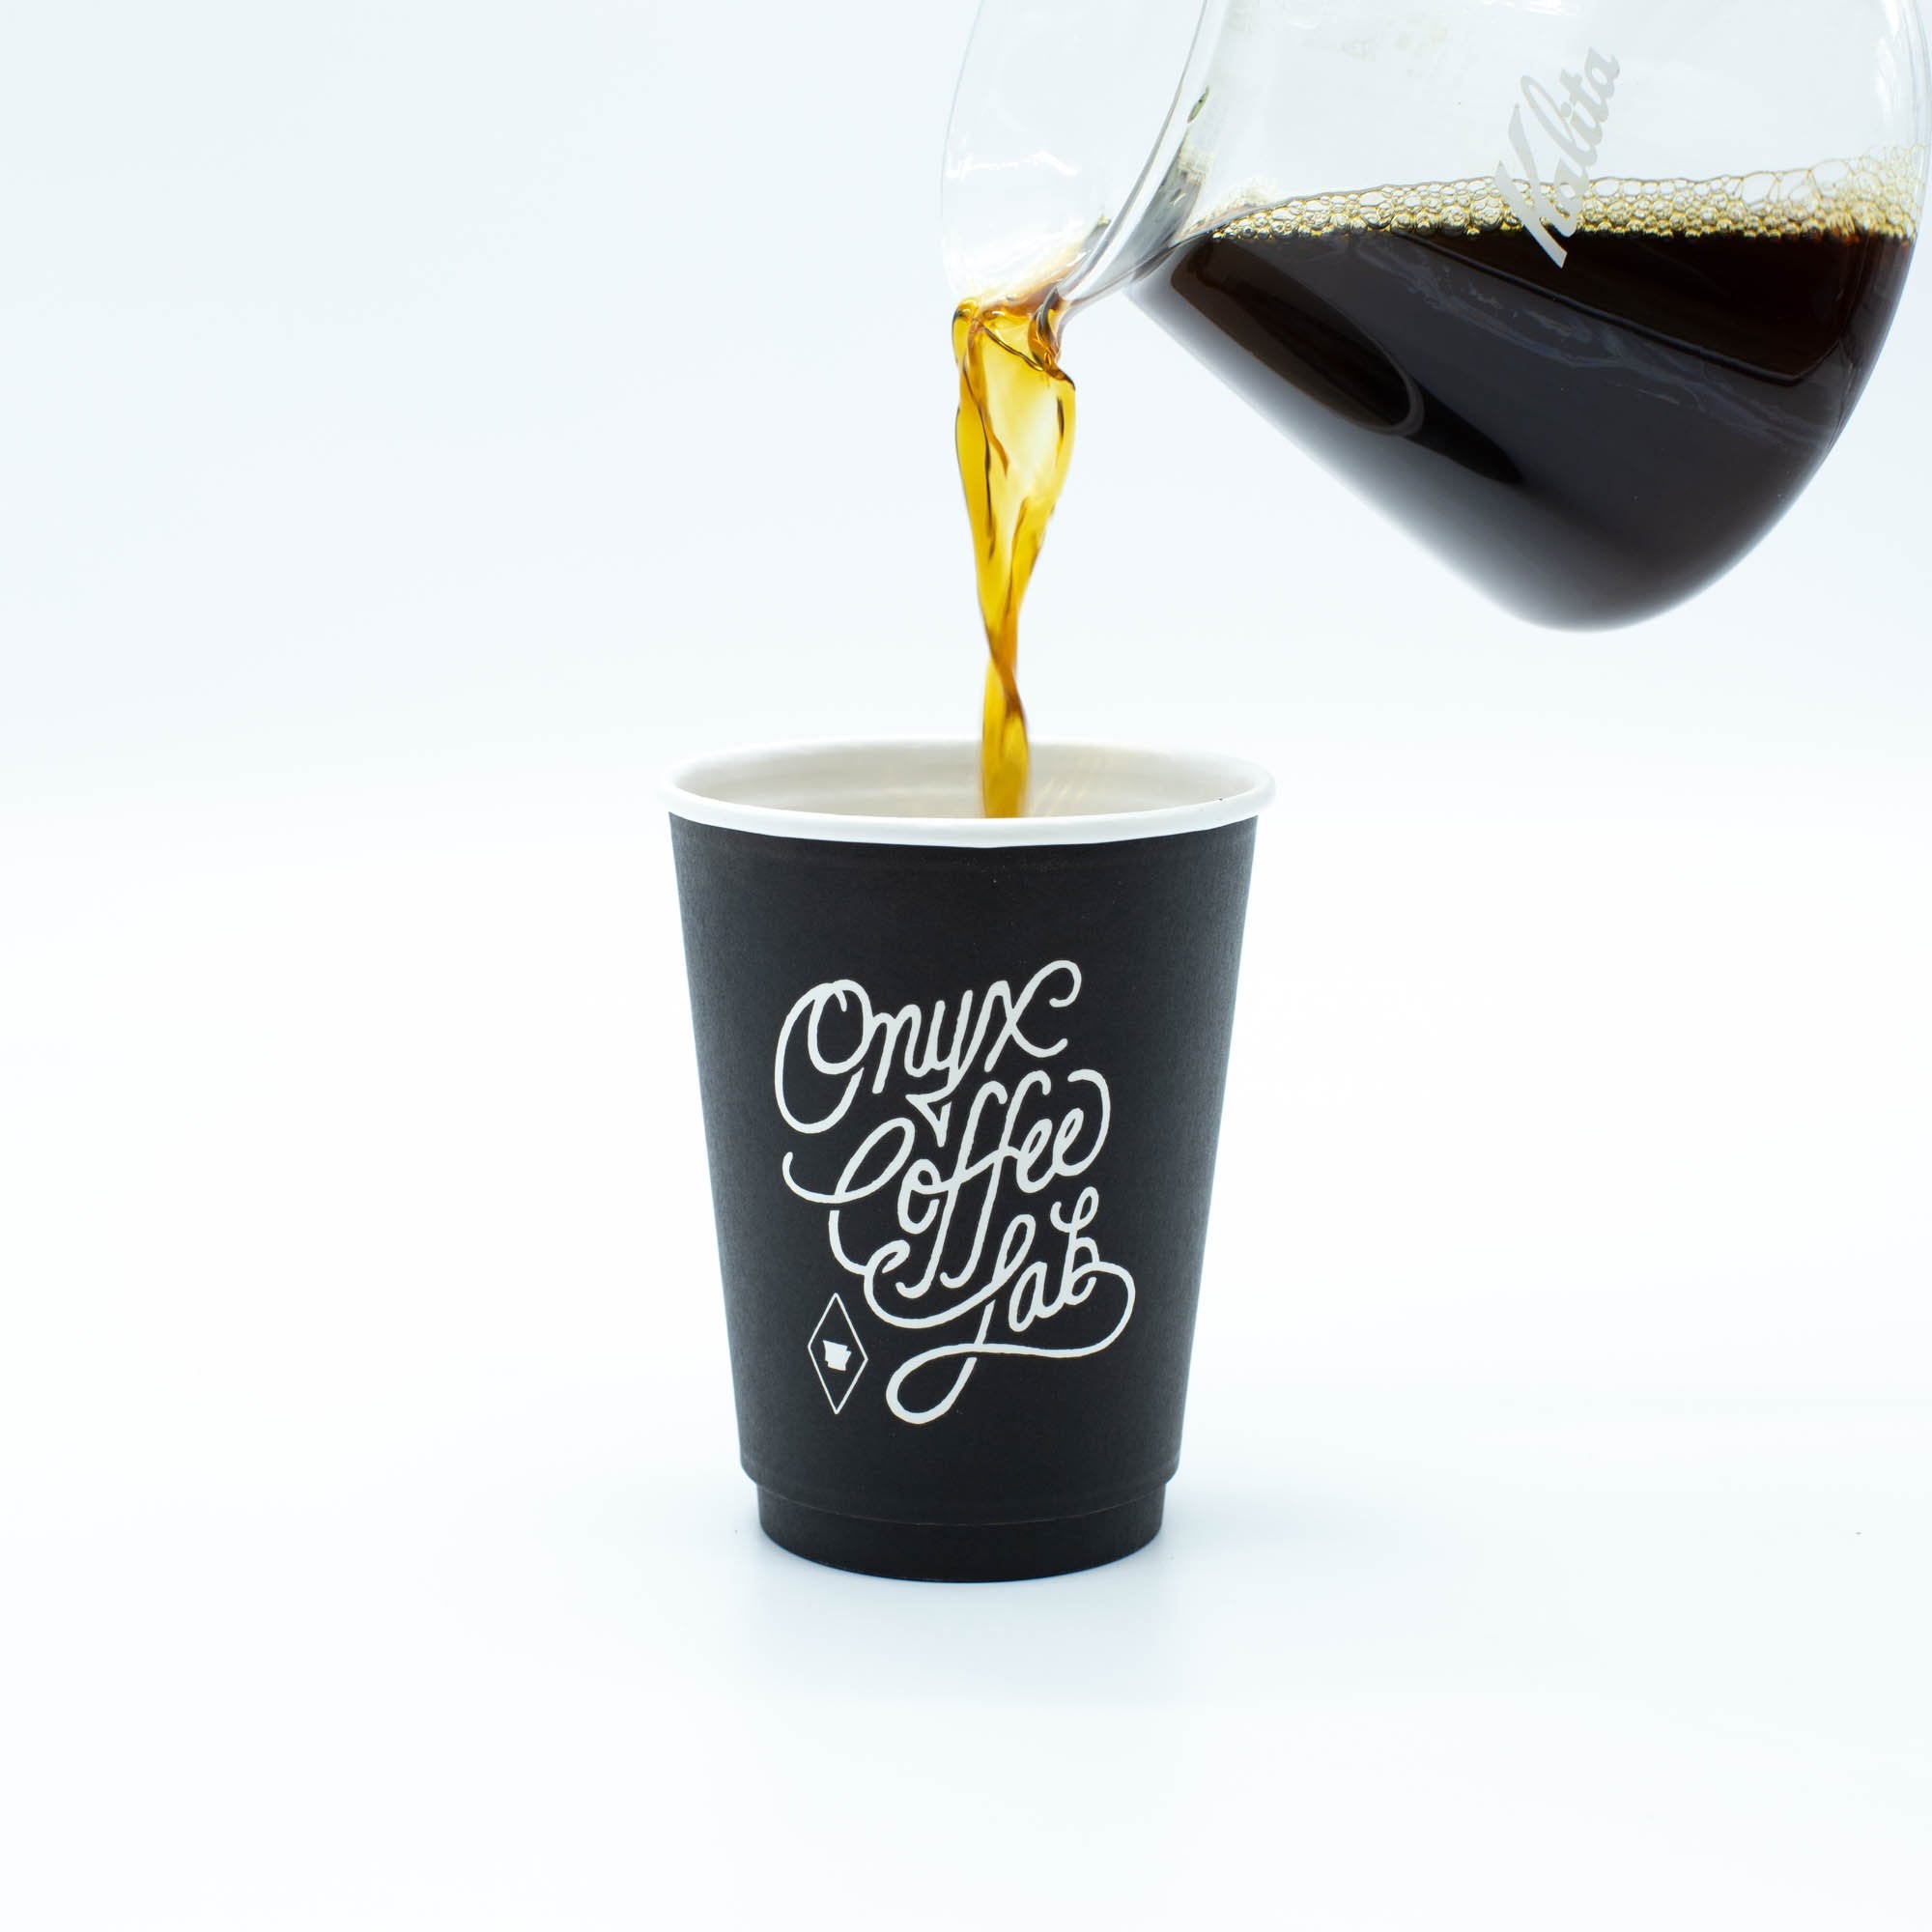 Onyx Coffee Lab — DESIGN IN COFFEE.